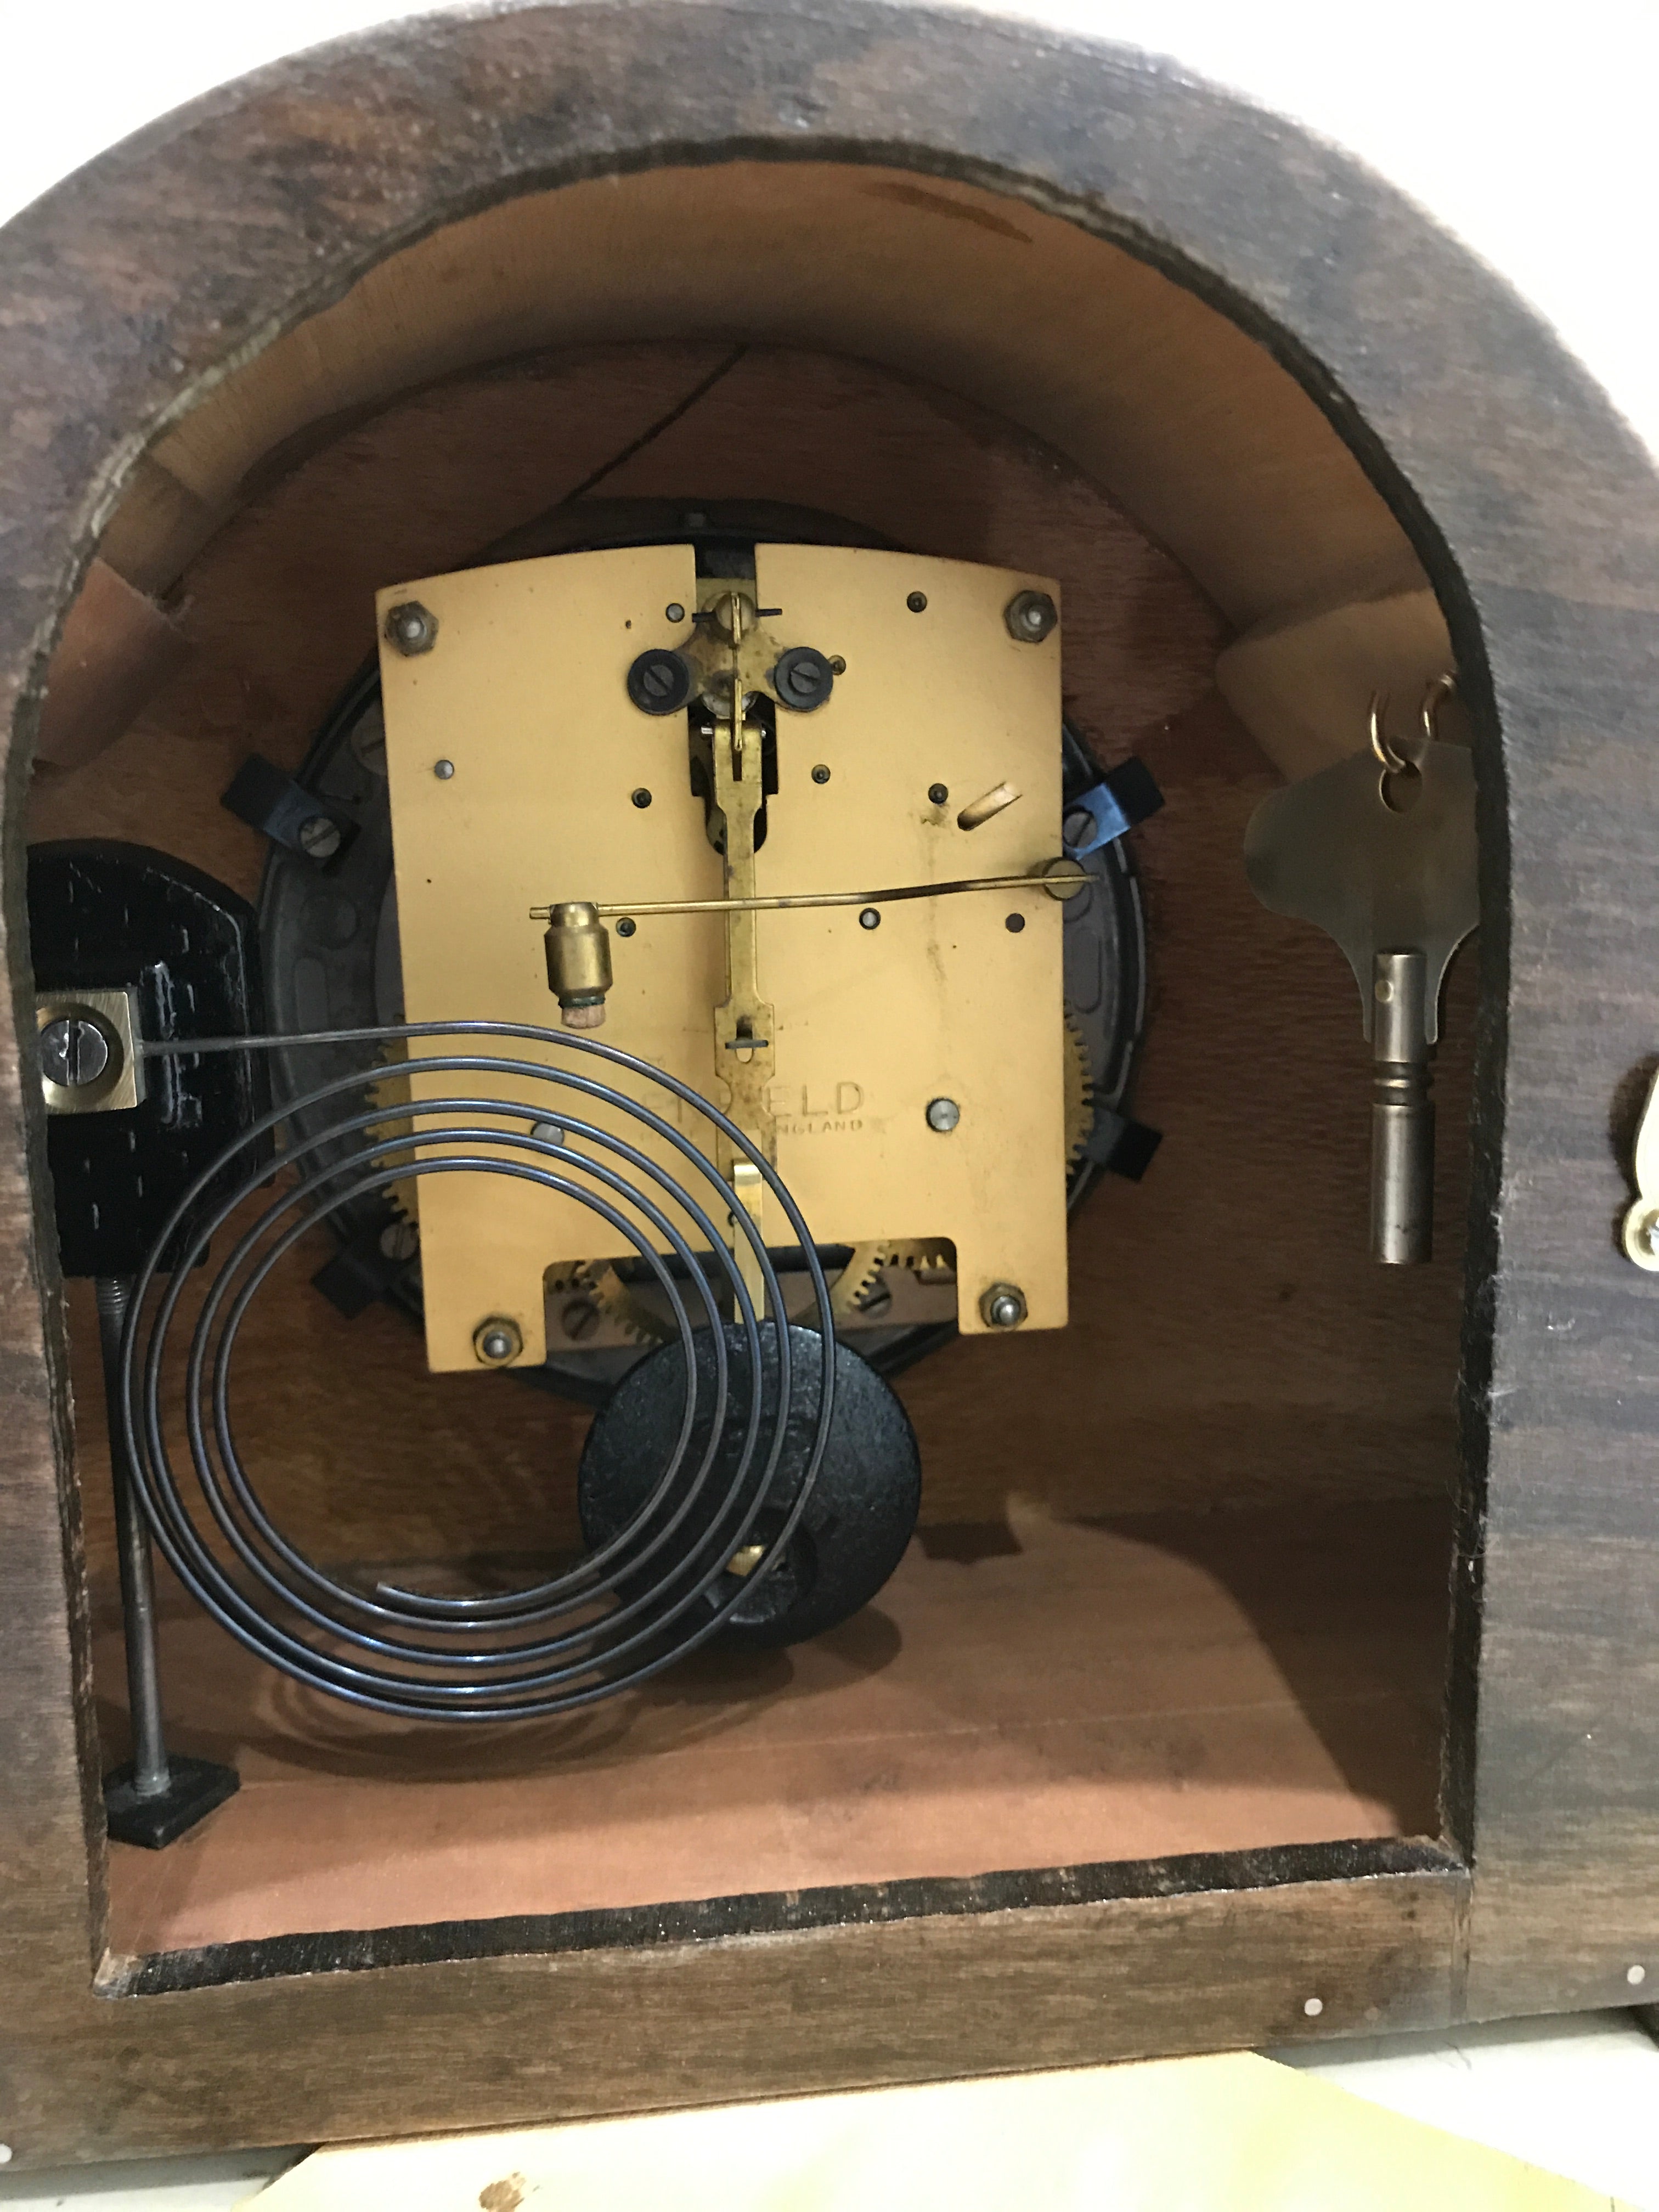 Vintage Enfield Chime Mantel Clock | eXibit collection